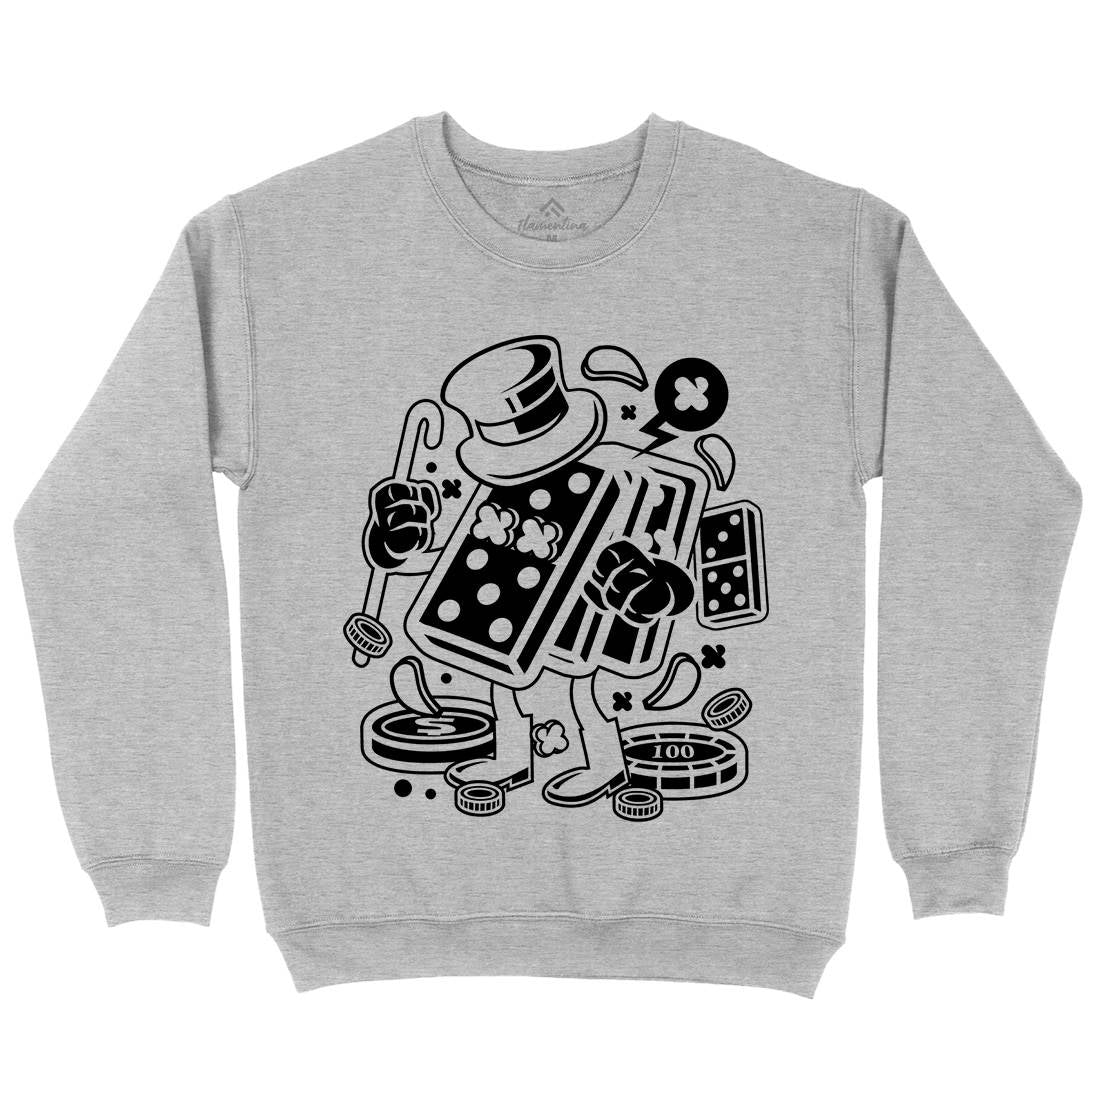 Classic Gambler Kids Crew Neck Sweatshirt Retro C070